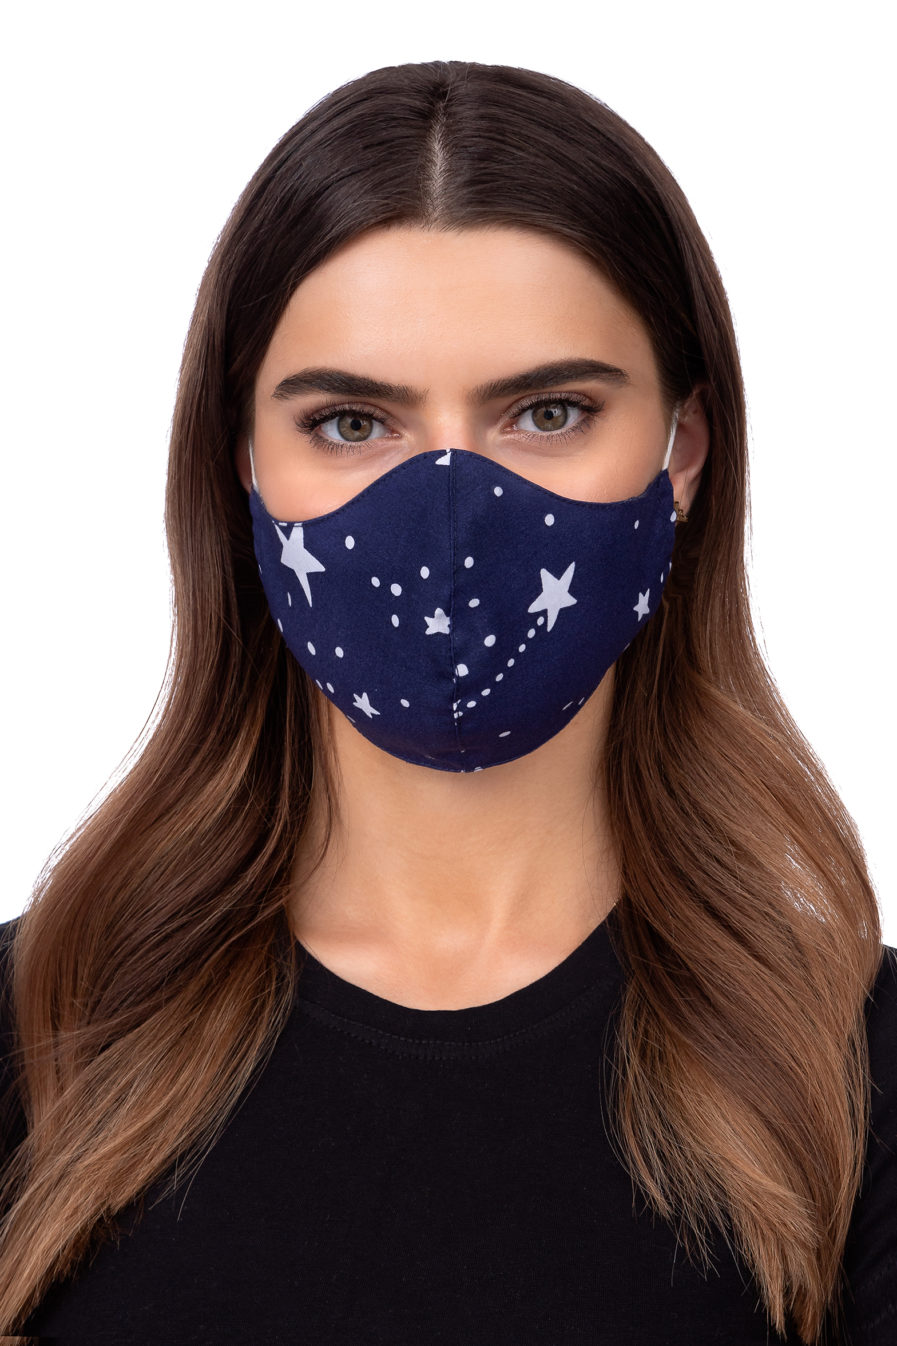 Maska ochronna na twarz - profilowana galaktyka